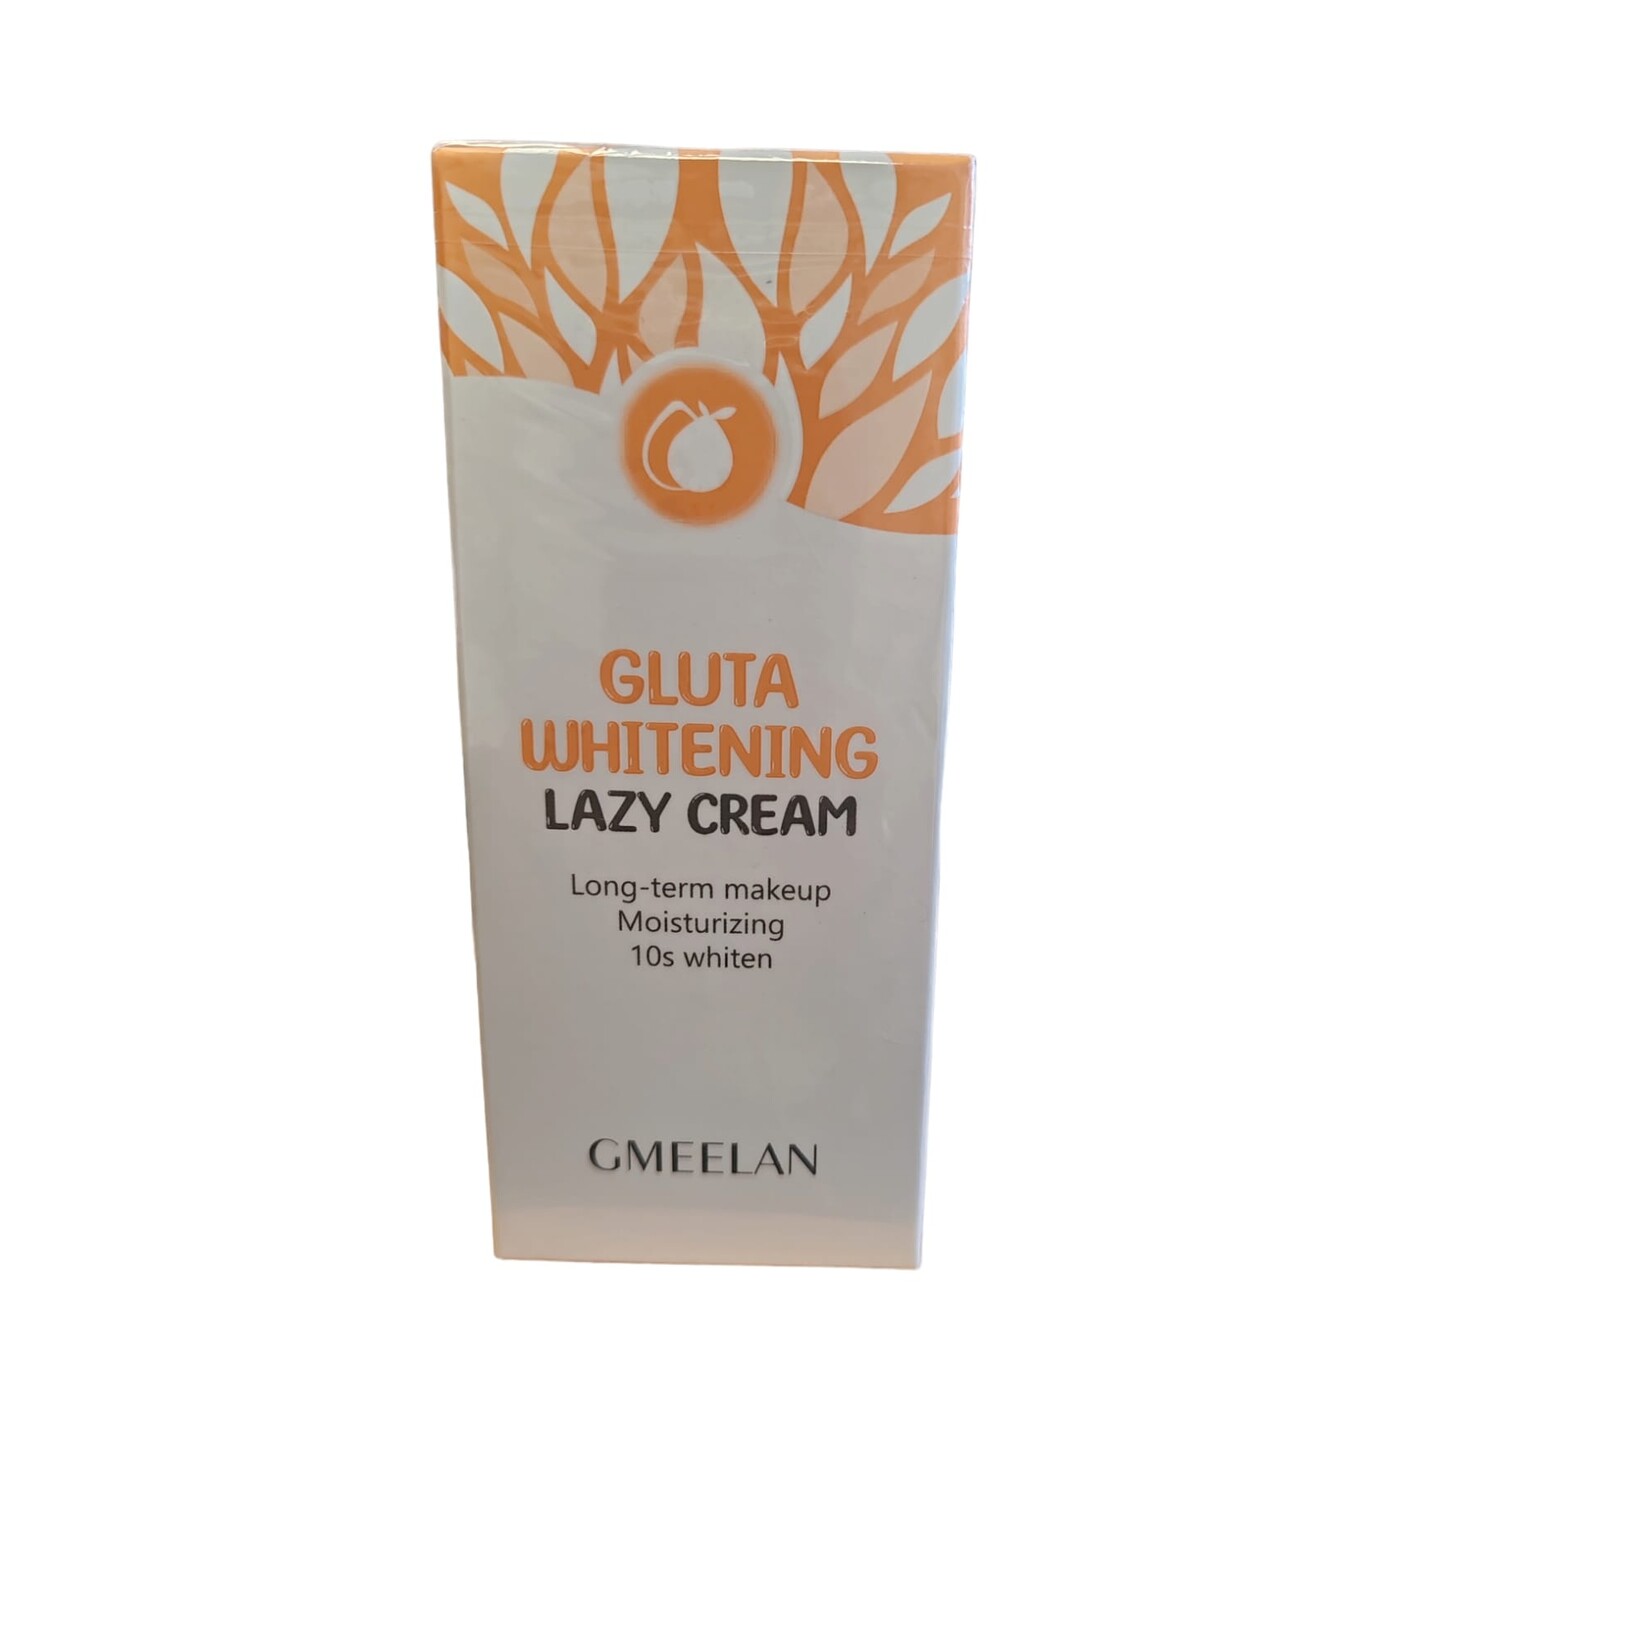 Gmeelan Gluta Whitening Lazy cream 30 grams